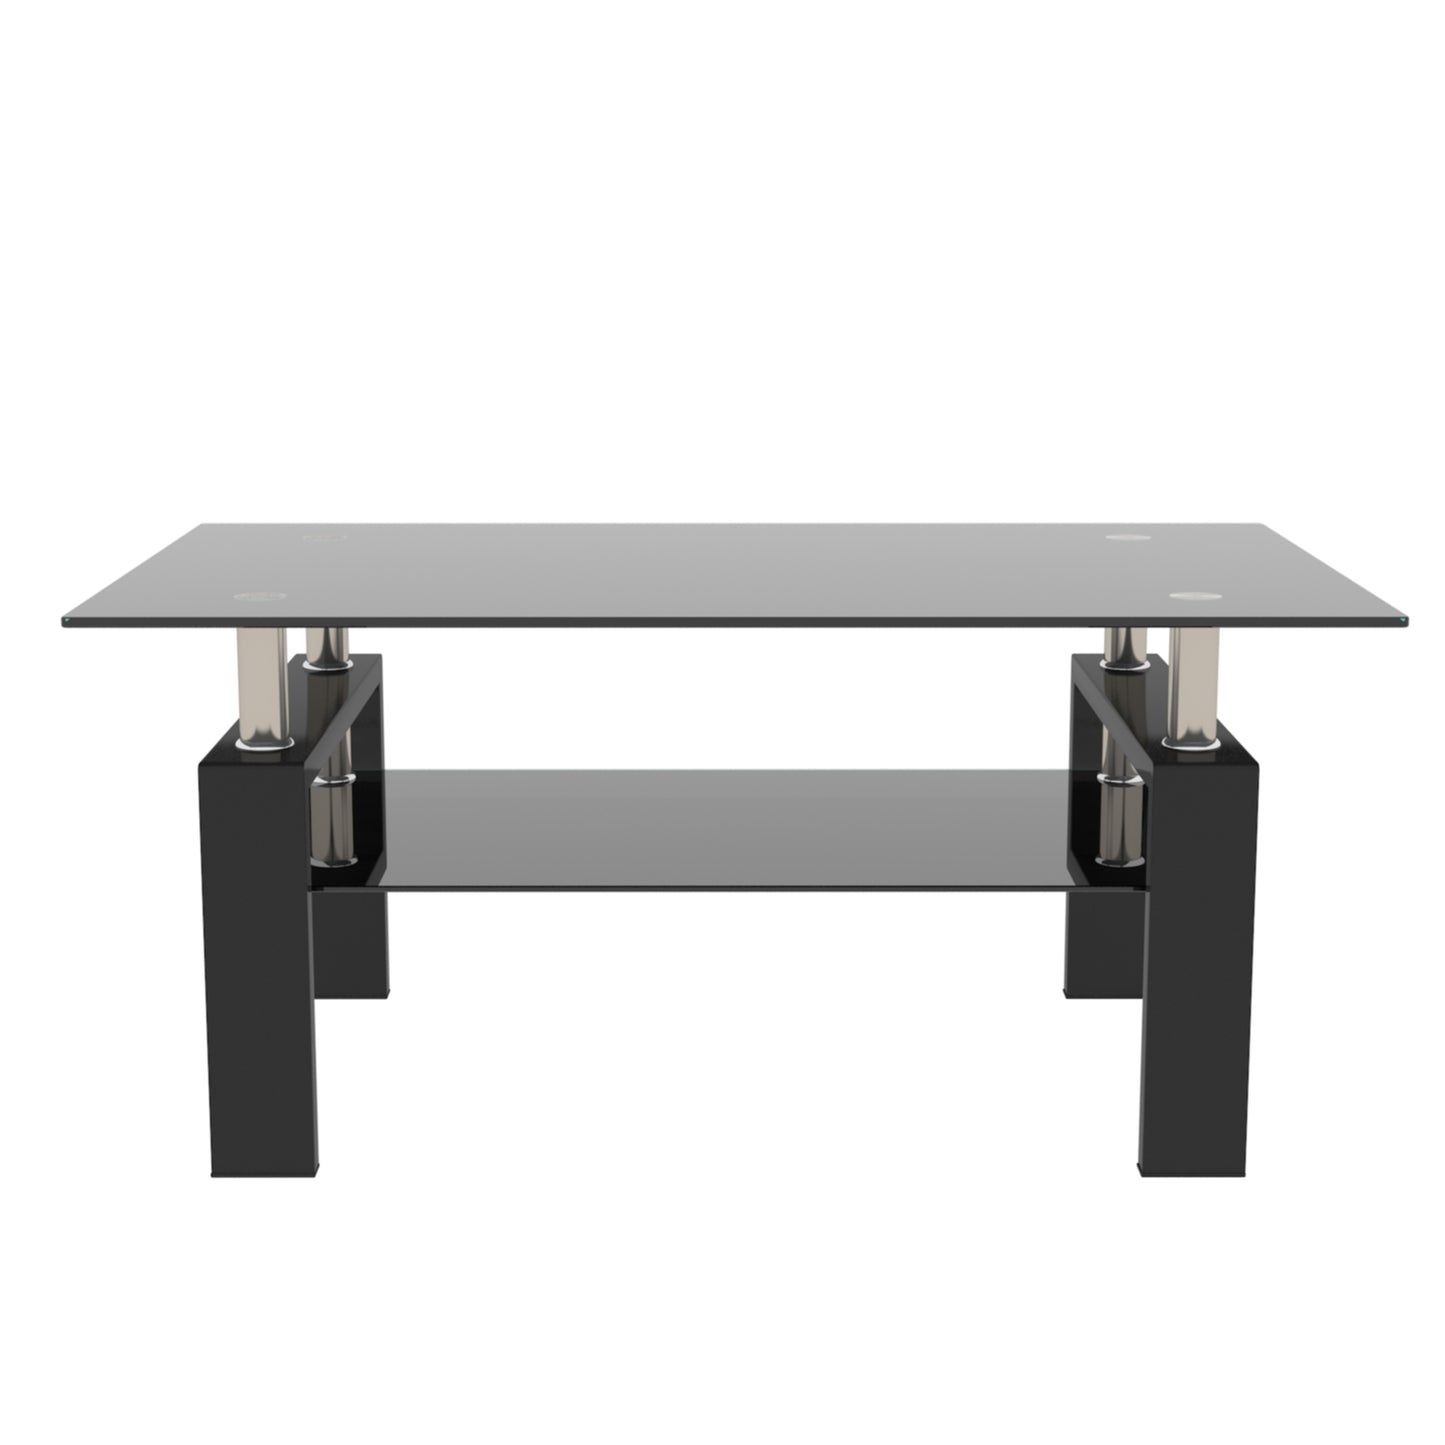 Sleek Rectangular Black Glass Coffee Table with Storage Space